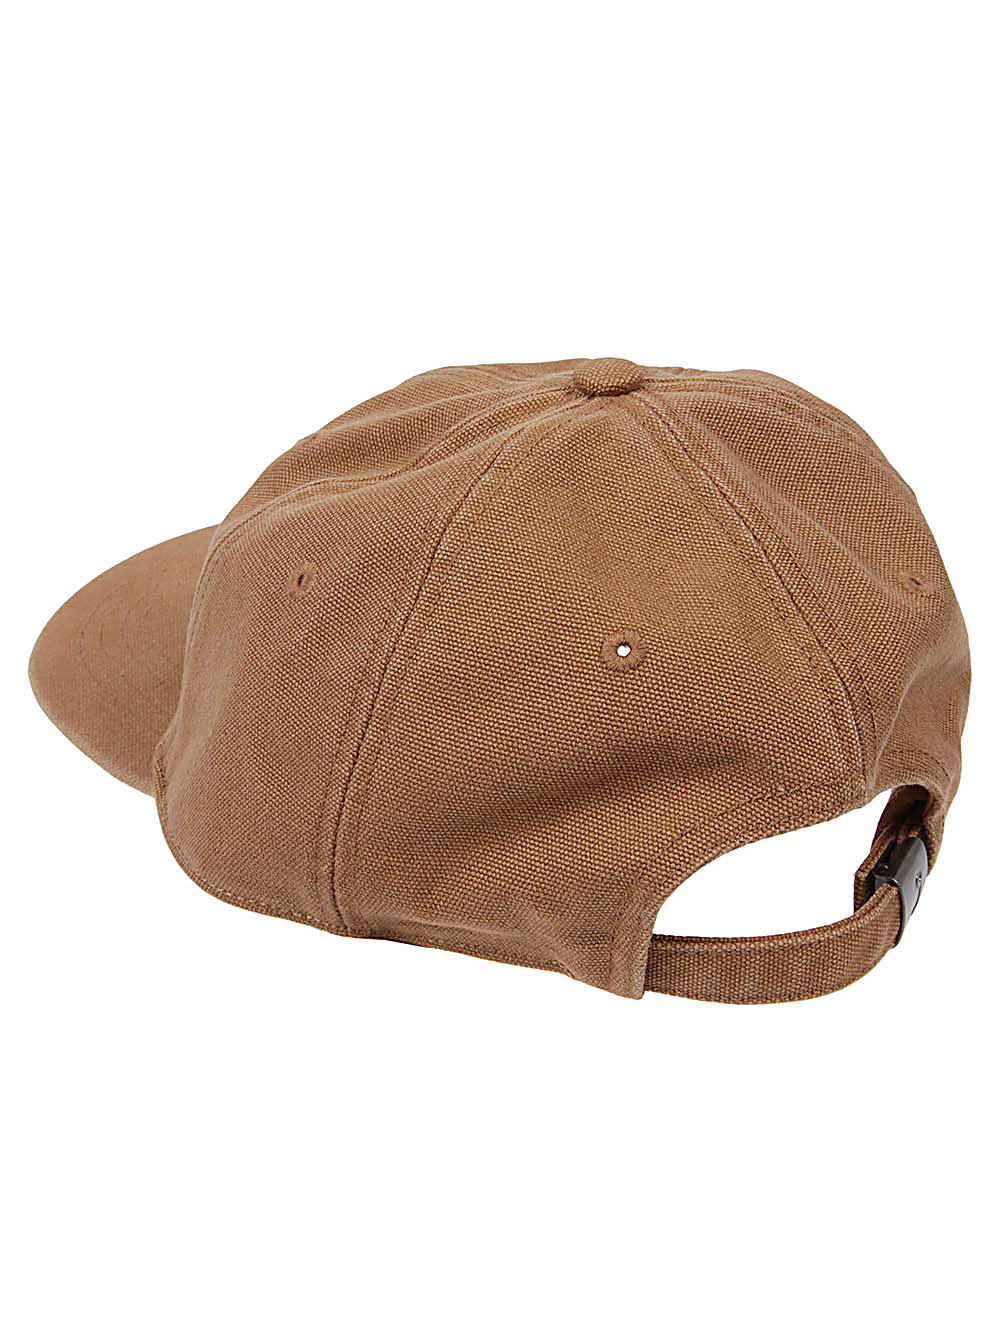 Carhartt Wip Main Hats Brown